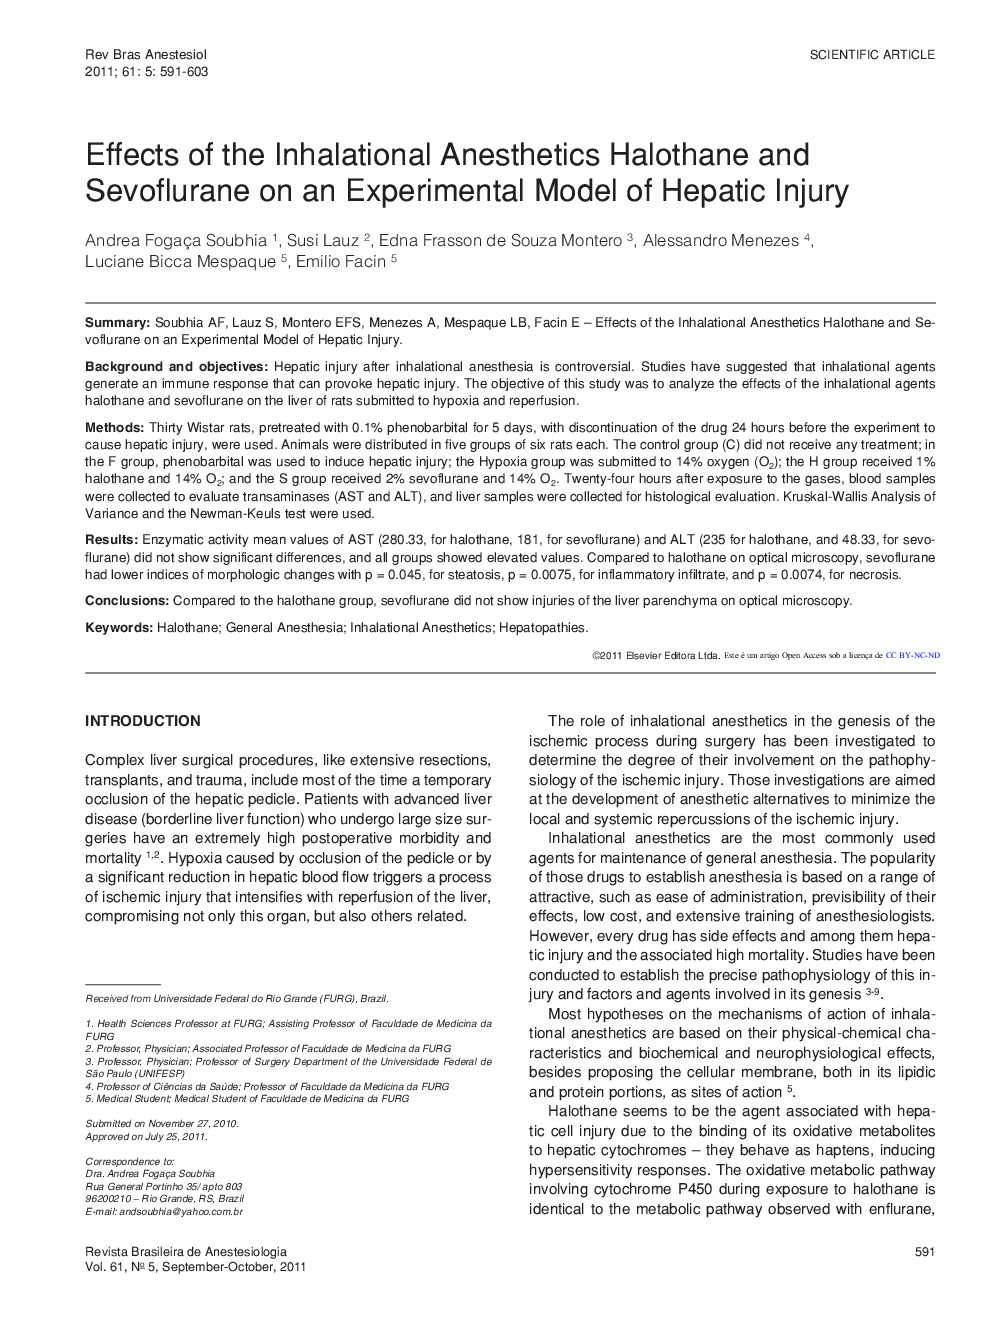 Effects of the Inhalational Anesthetics Halothane and Sevoflurane on an Experimental Model of Hepatic Injury